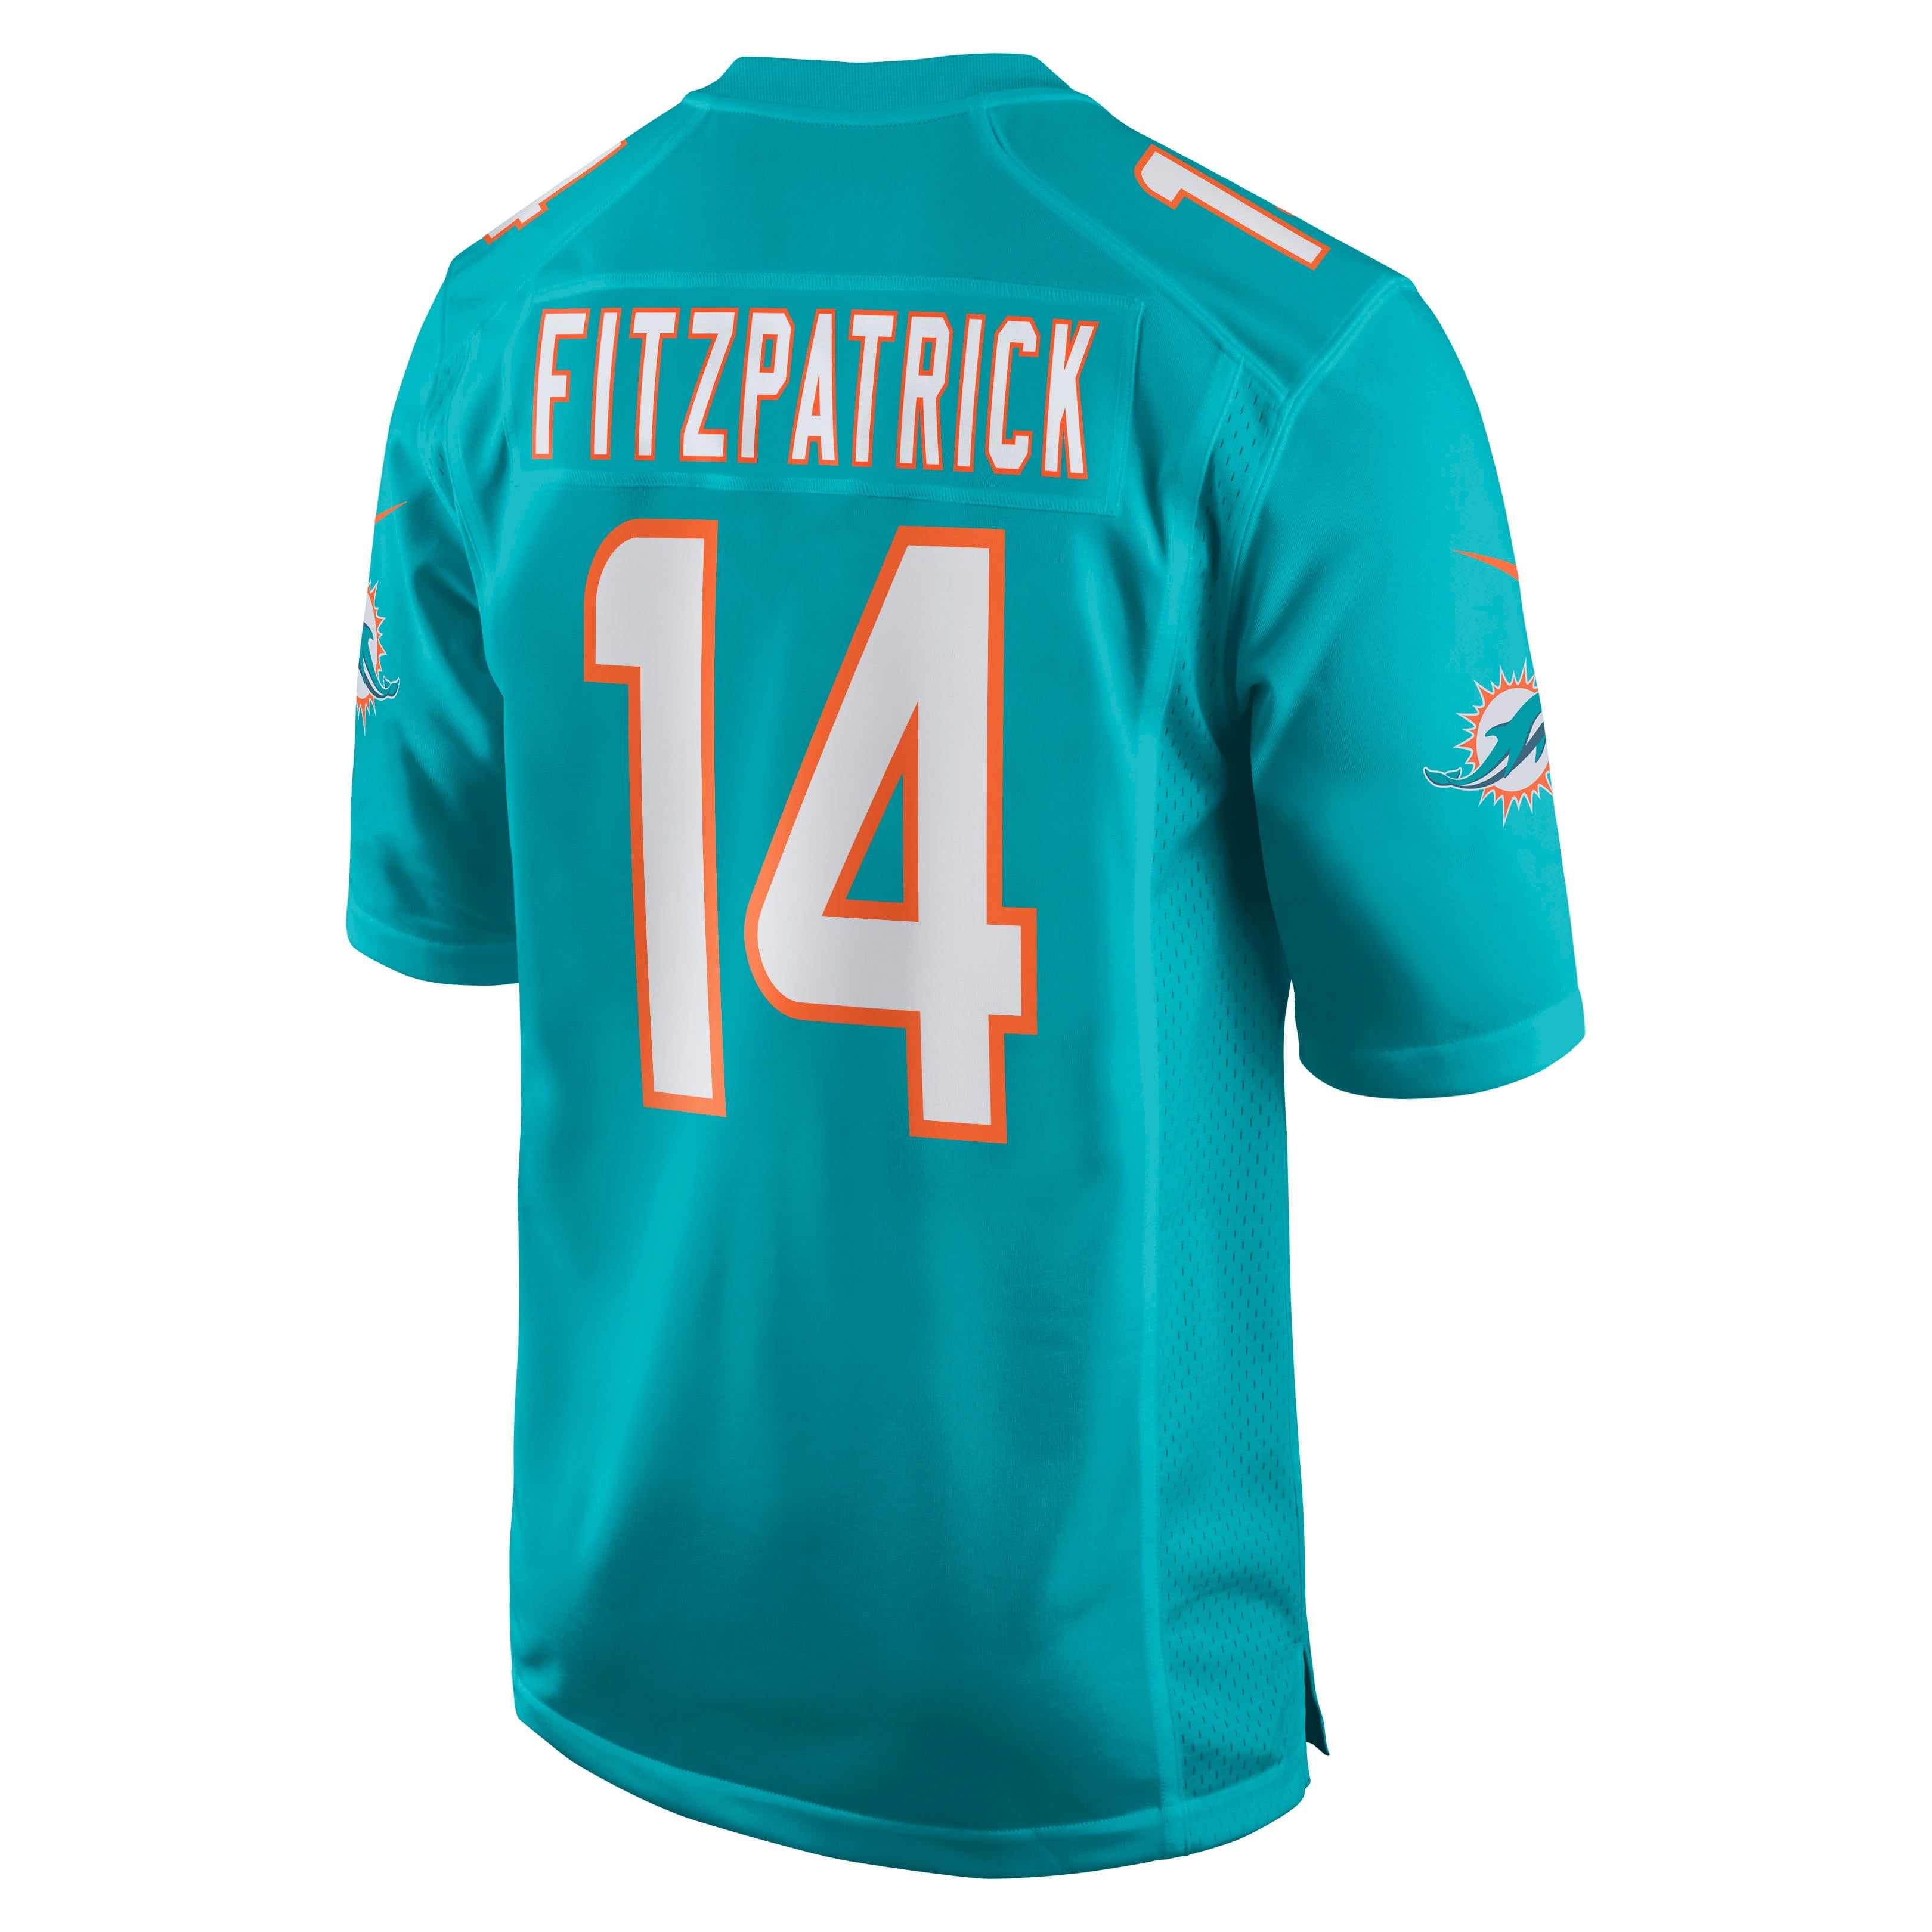 fitzpatrick jersey